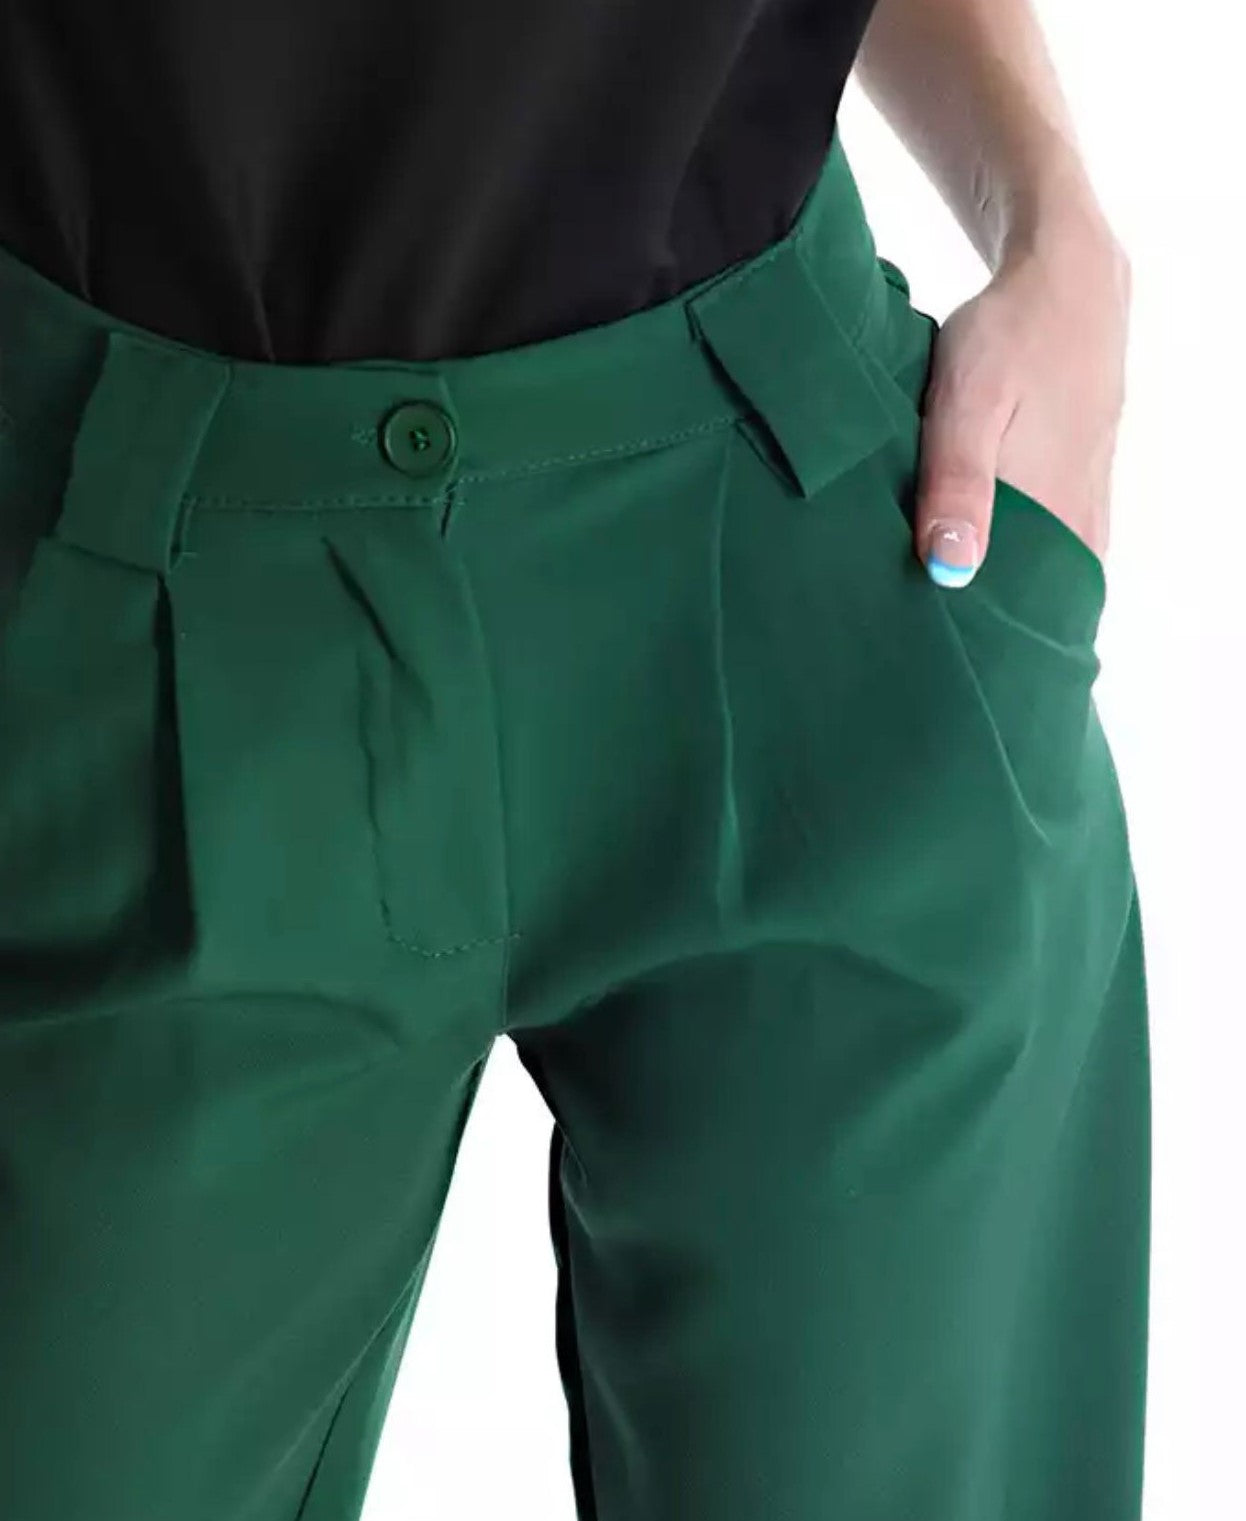 Pantalon ample cigarette vert émeraude